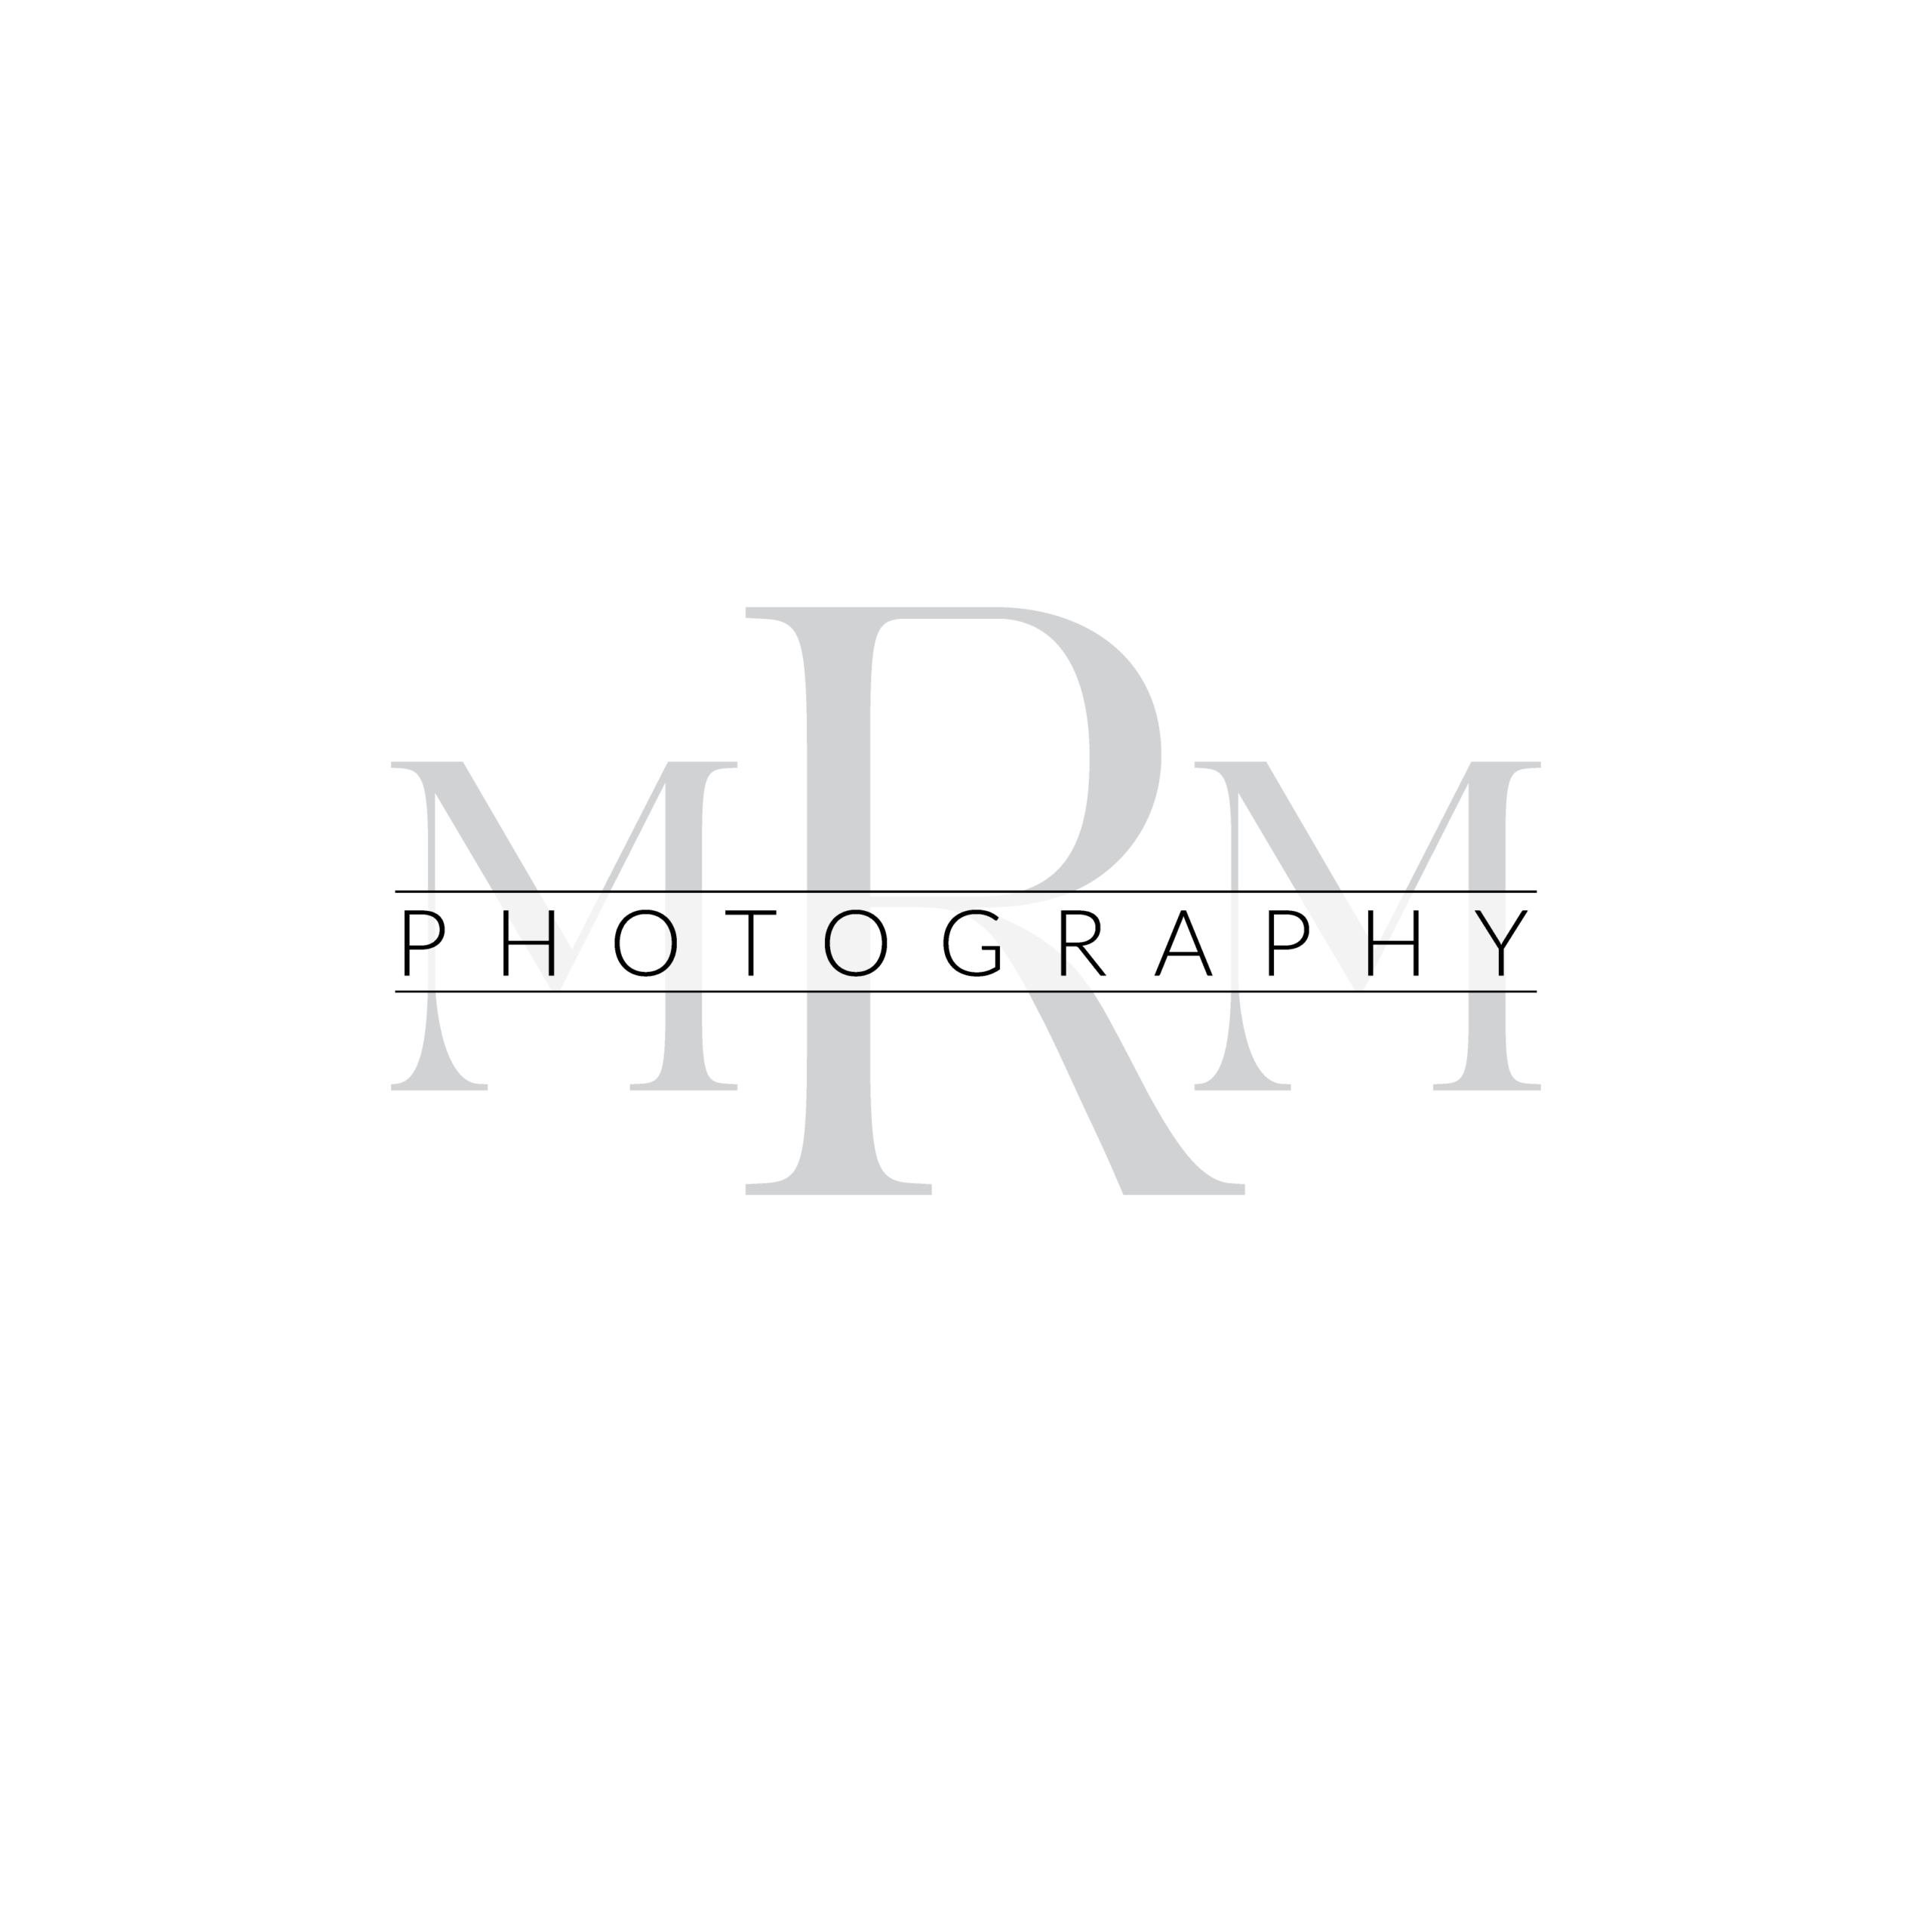 MMR Photography